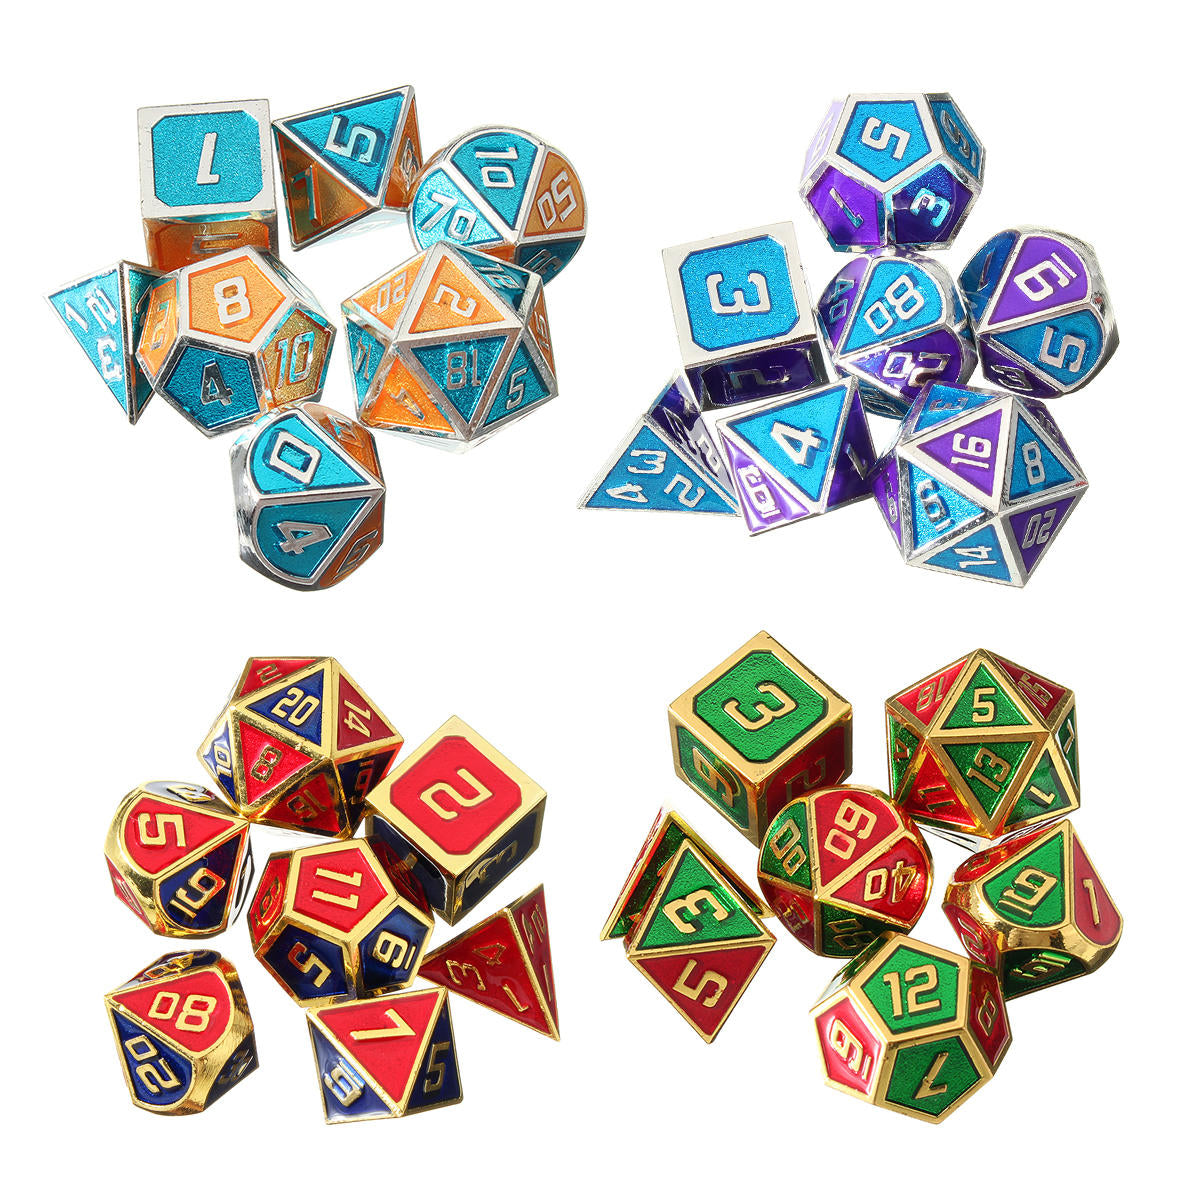 7 stuks polyhedral dices set voor dungeons dragons d20 d12 d10 d8 d6 d4 games + opbergzakjes tas